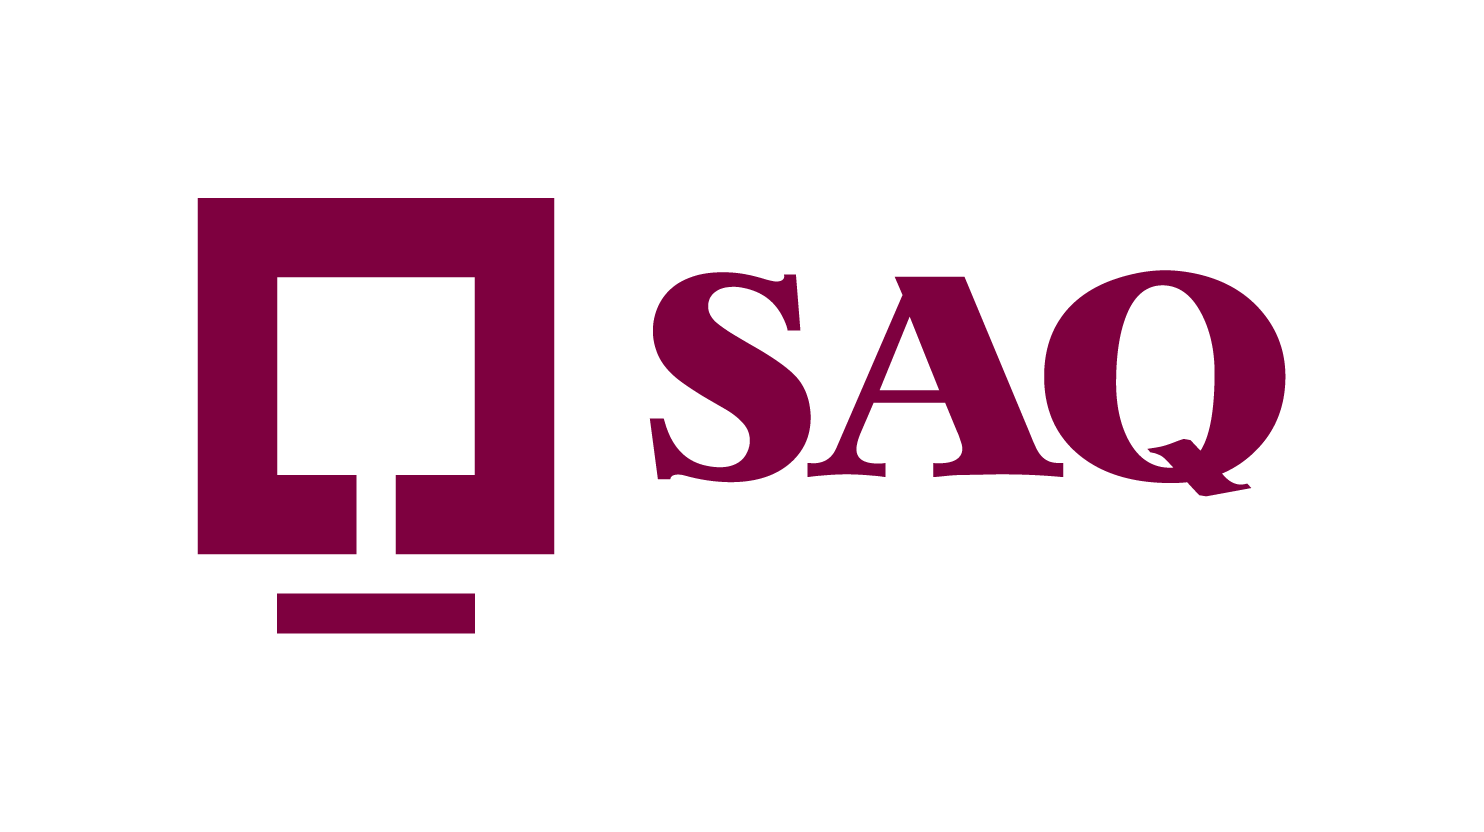 Logo of SAQ